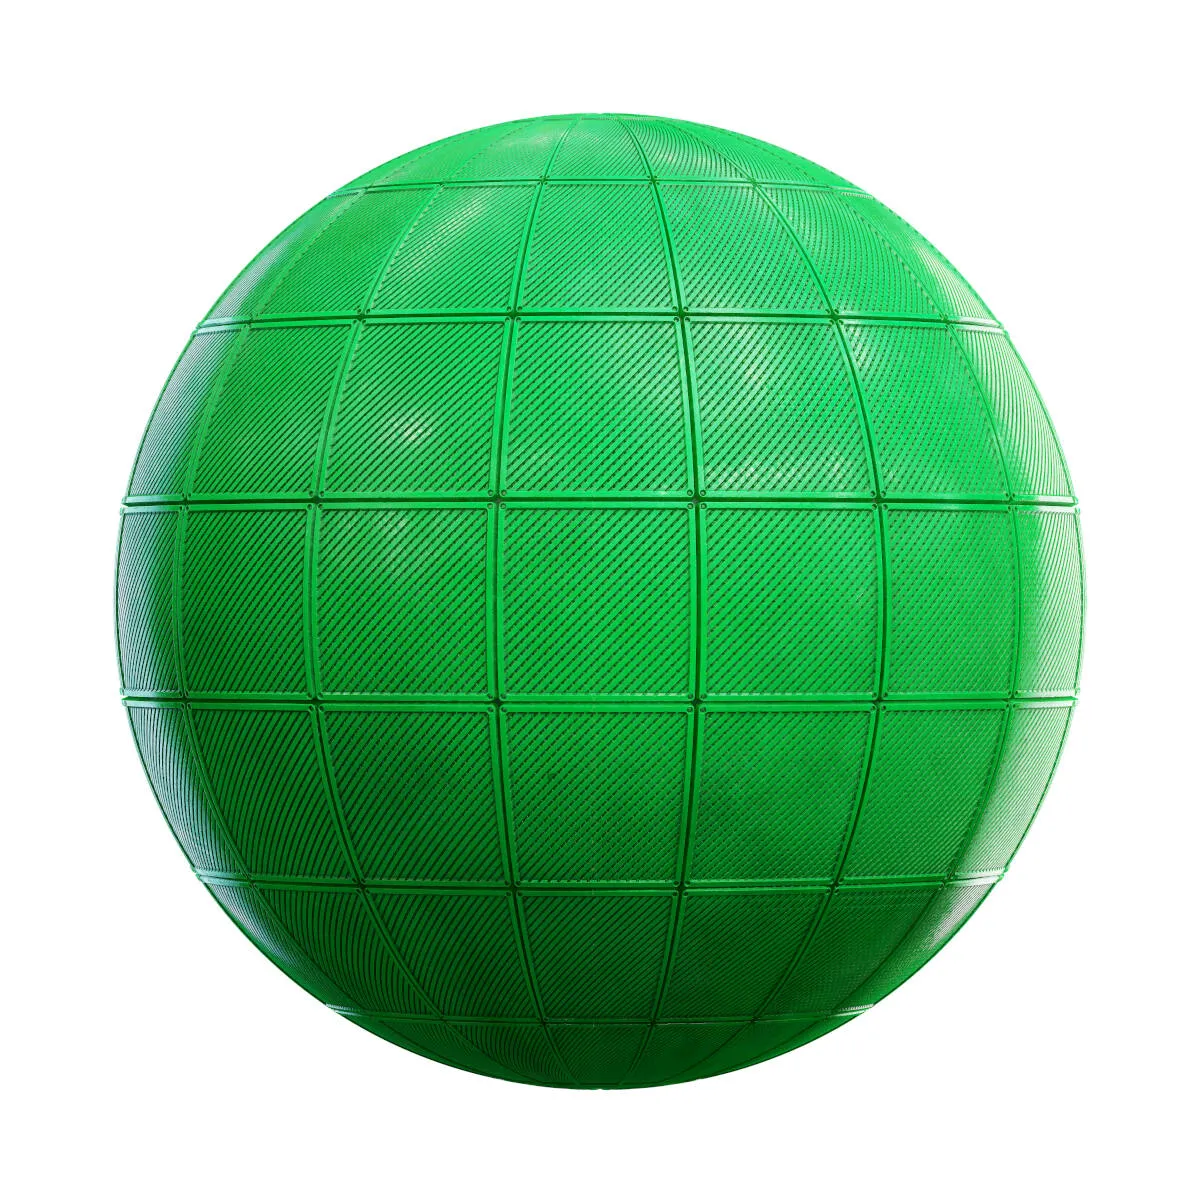 PBR Textures Volume 44 – Plastic – 4K – 8K – green_plastic_vents_41_86